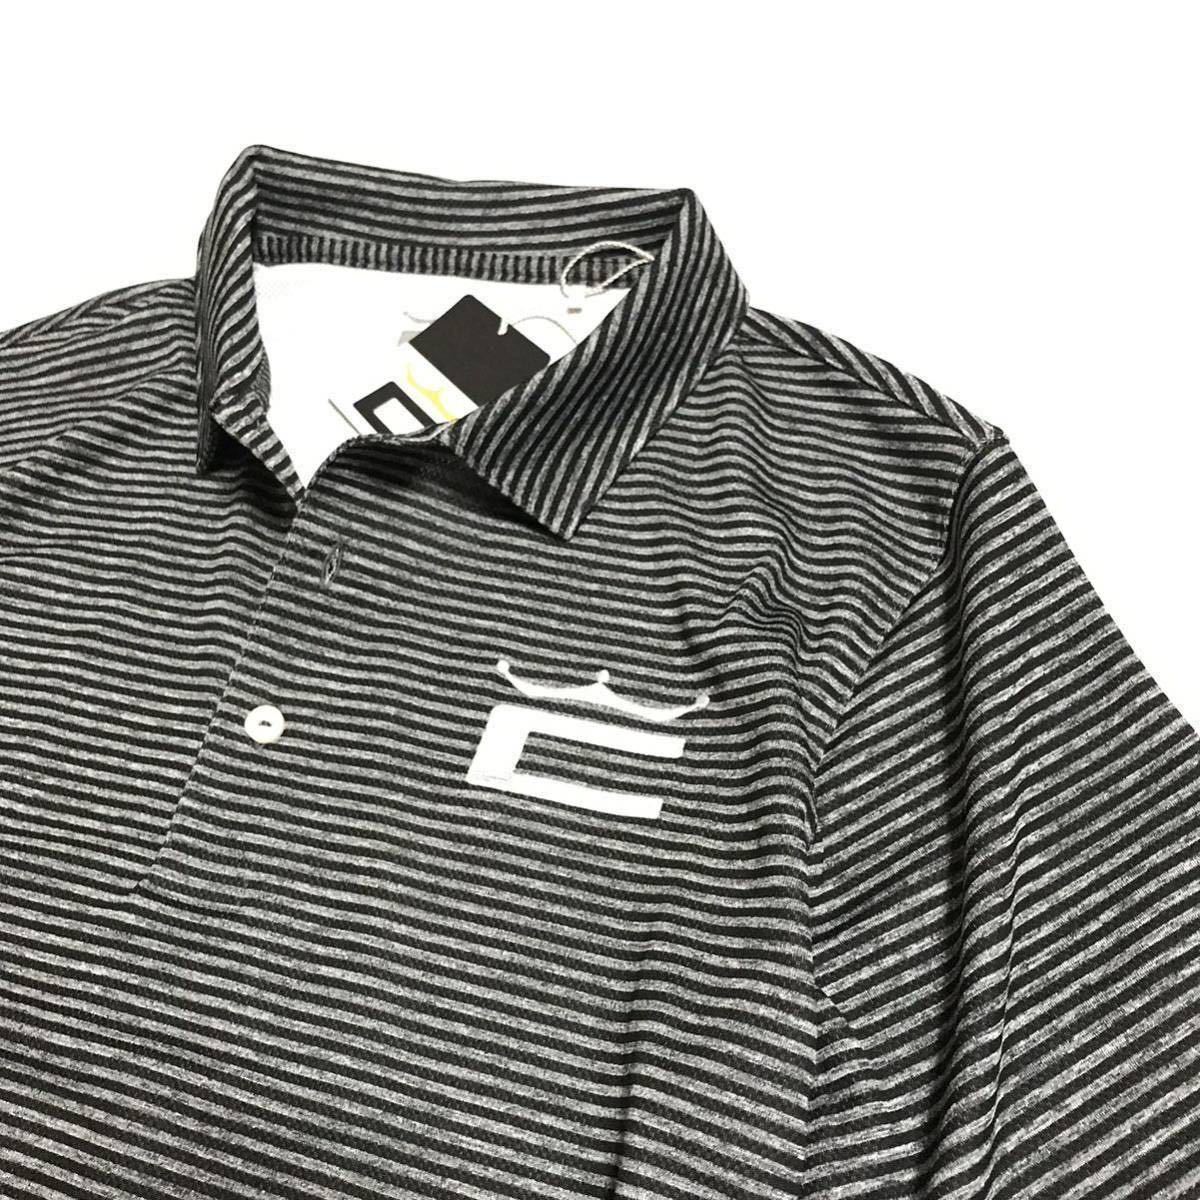 ◆H179新品 【メンズM】黒ブラック PUMA Cobra Golf プーマ コブラゴルフ 左胸刺繍ロゴ 高品質 ストレッチ DRYボーダーポロシャツの画像2